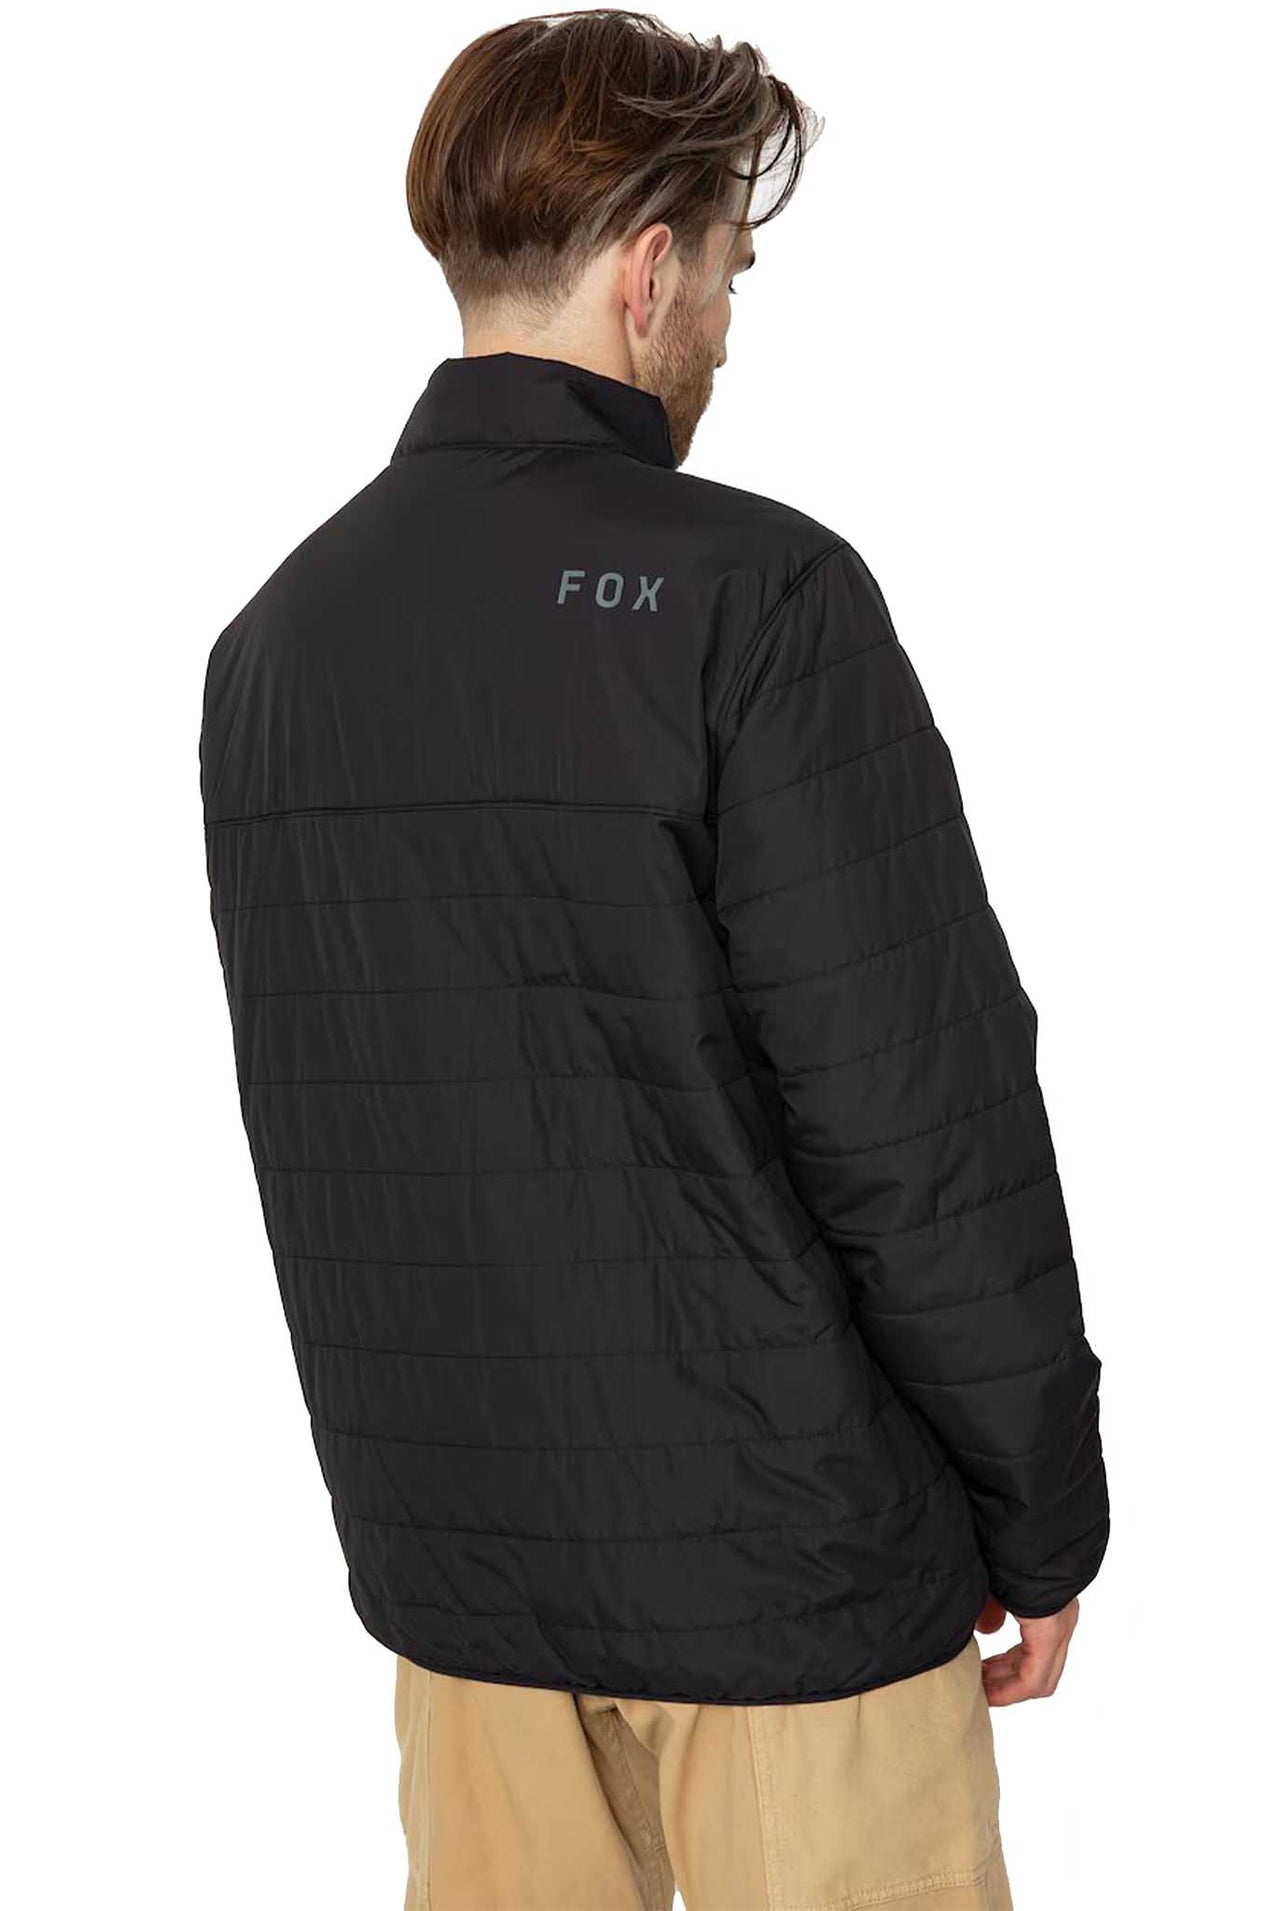 Chaqueta Fox Howell Puffy Jacket